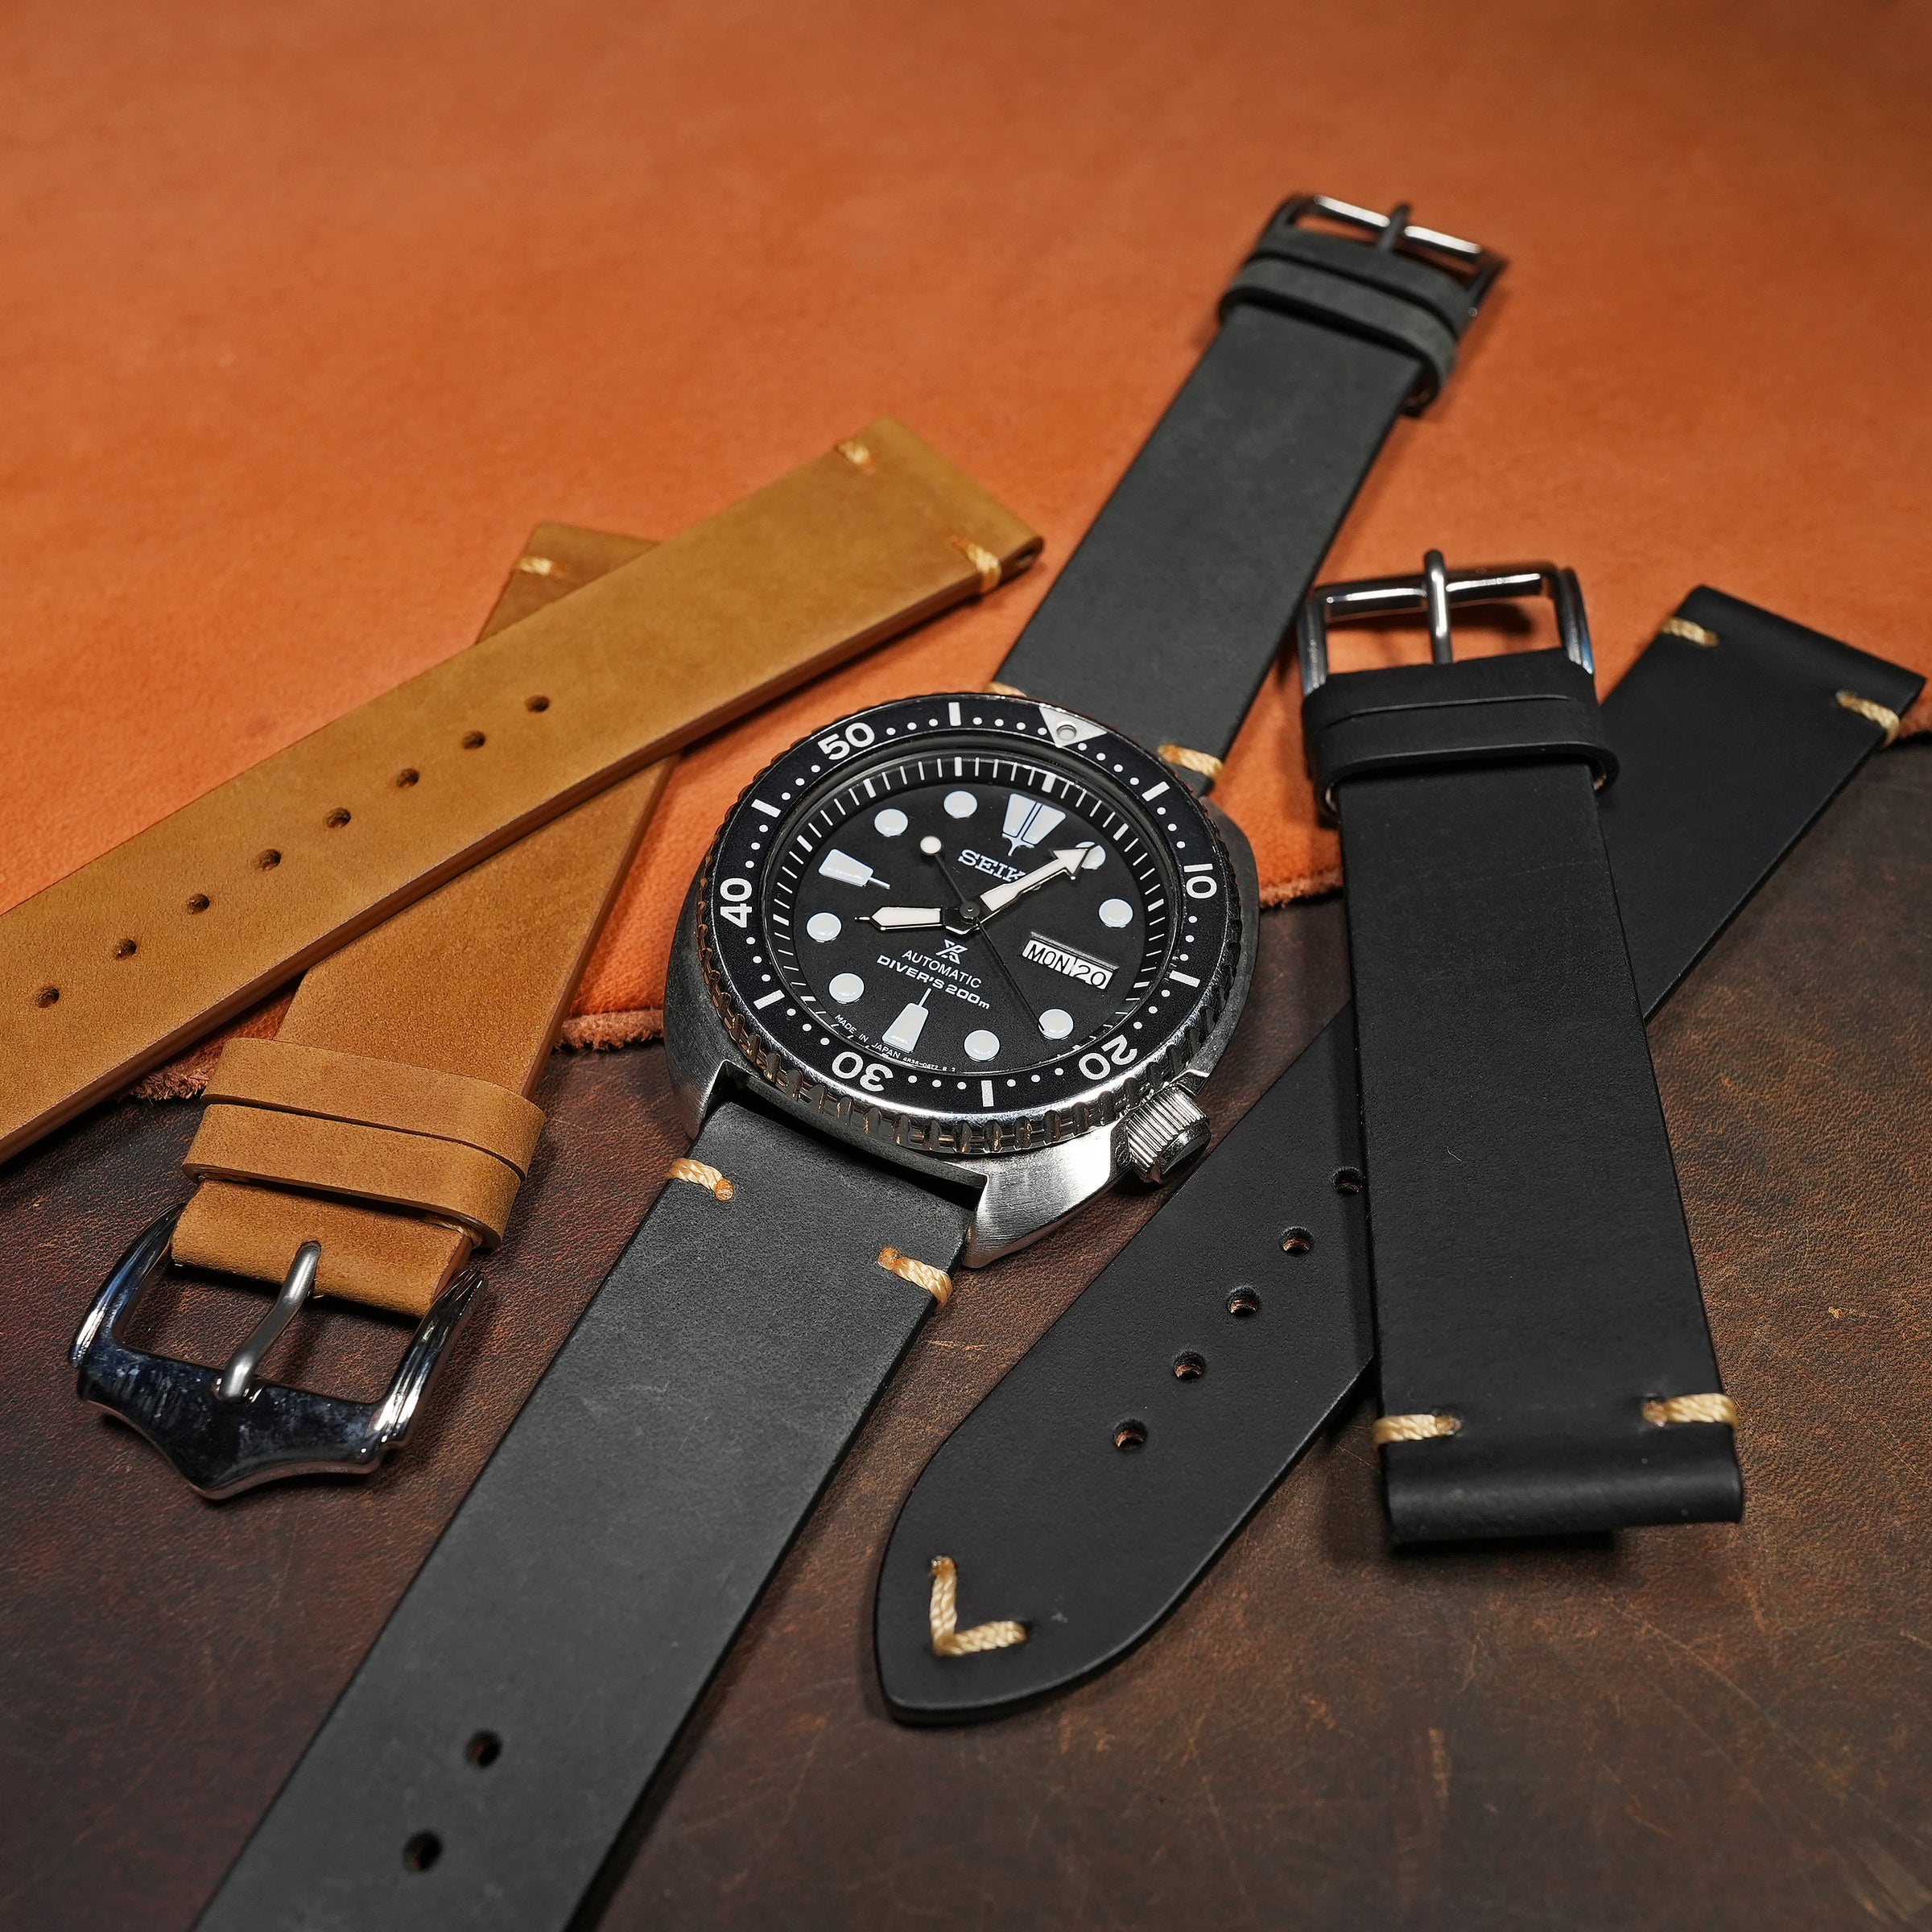 Premium Vintage Calf Leather Watch Strap in Grey - Nomad Watch Works SG